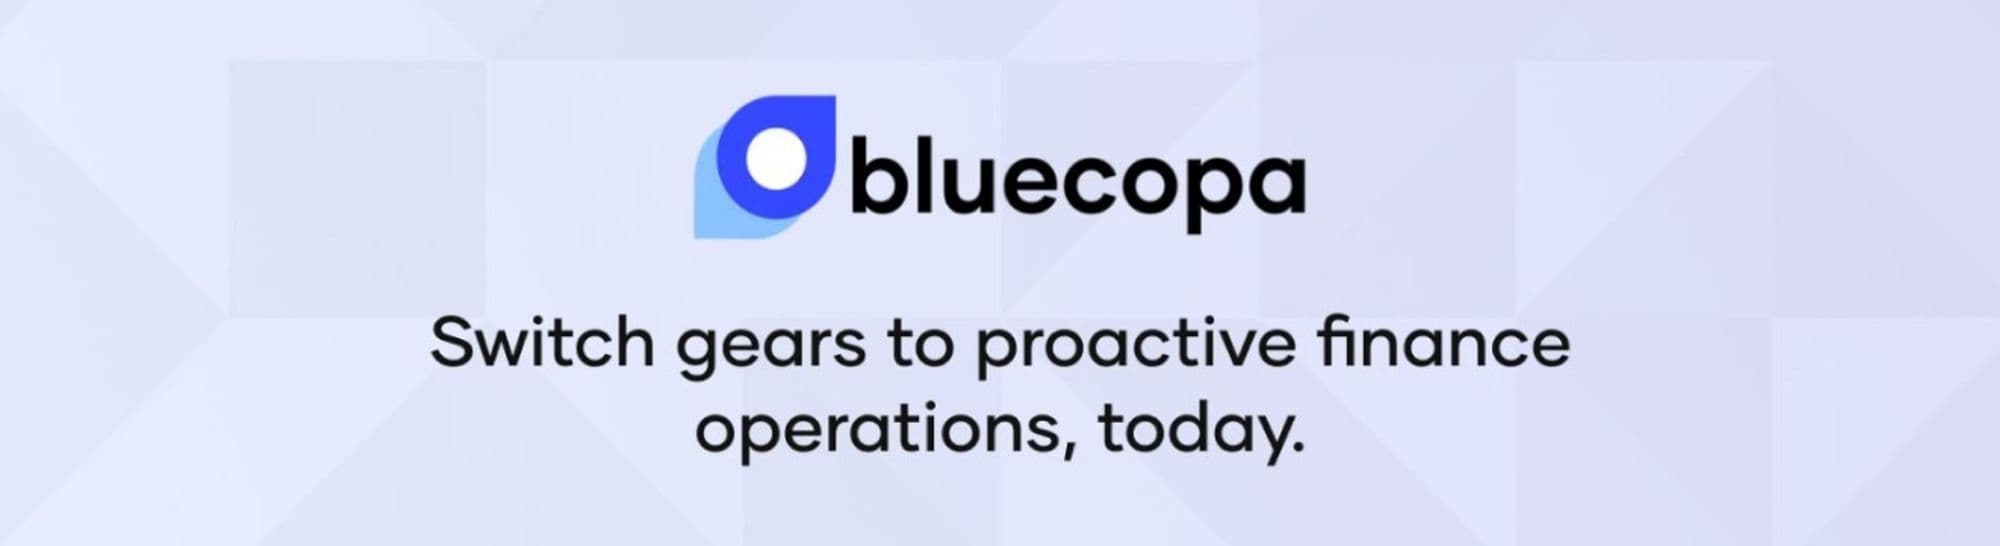 Bluecopa Cover Image